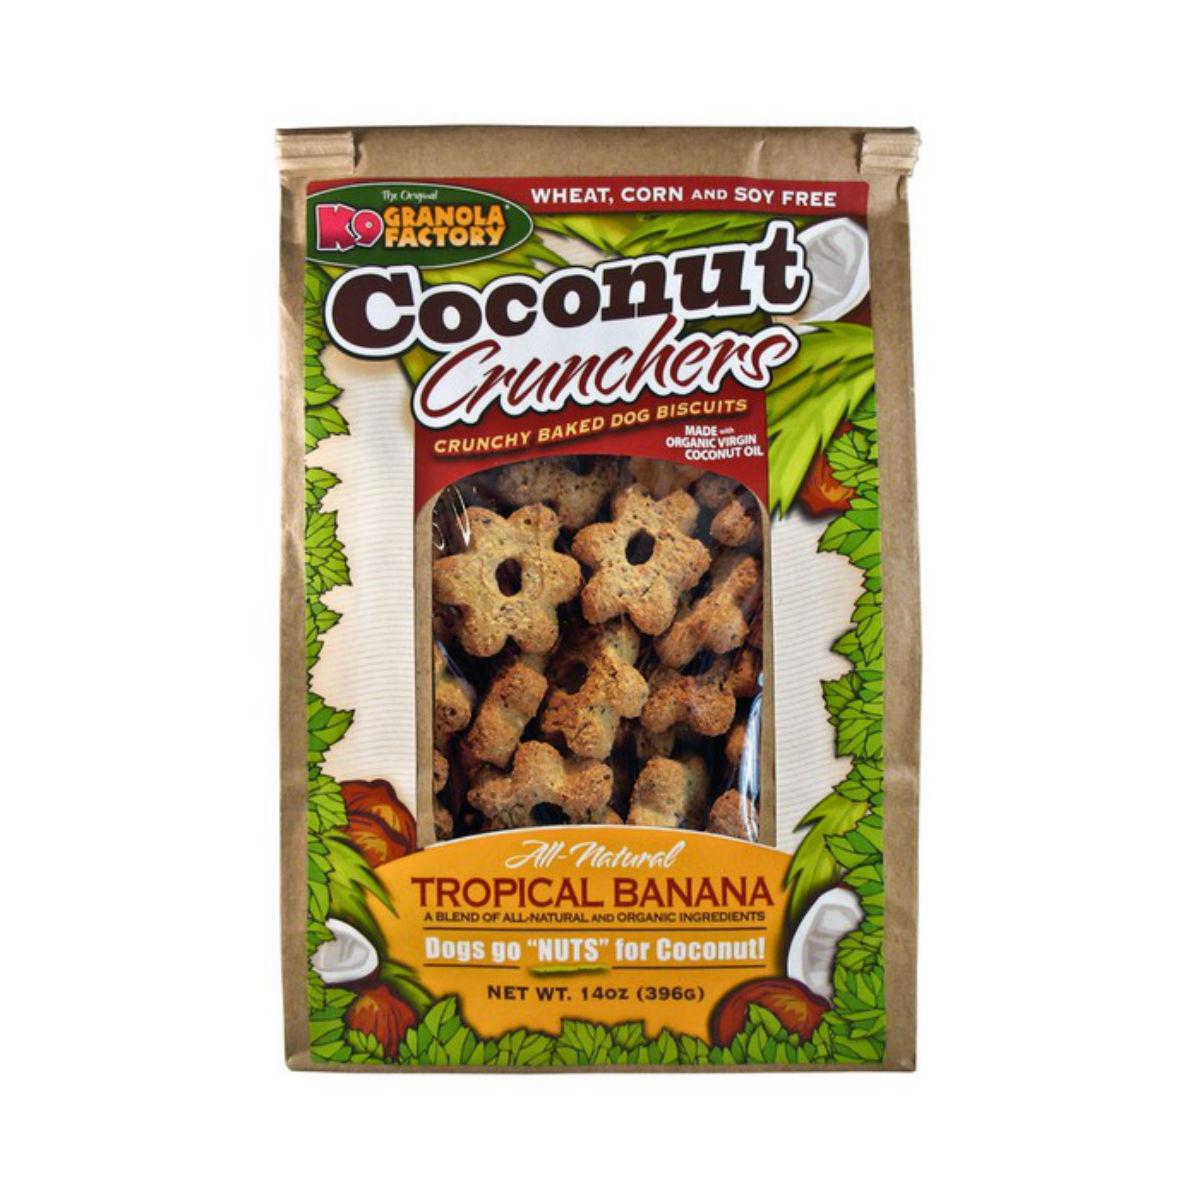 K9 Granola Factory Coconut Crunchers Dog Treats - Tropical Banana